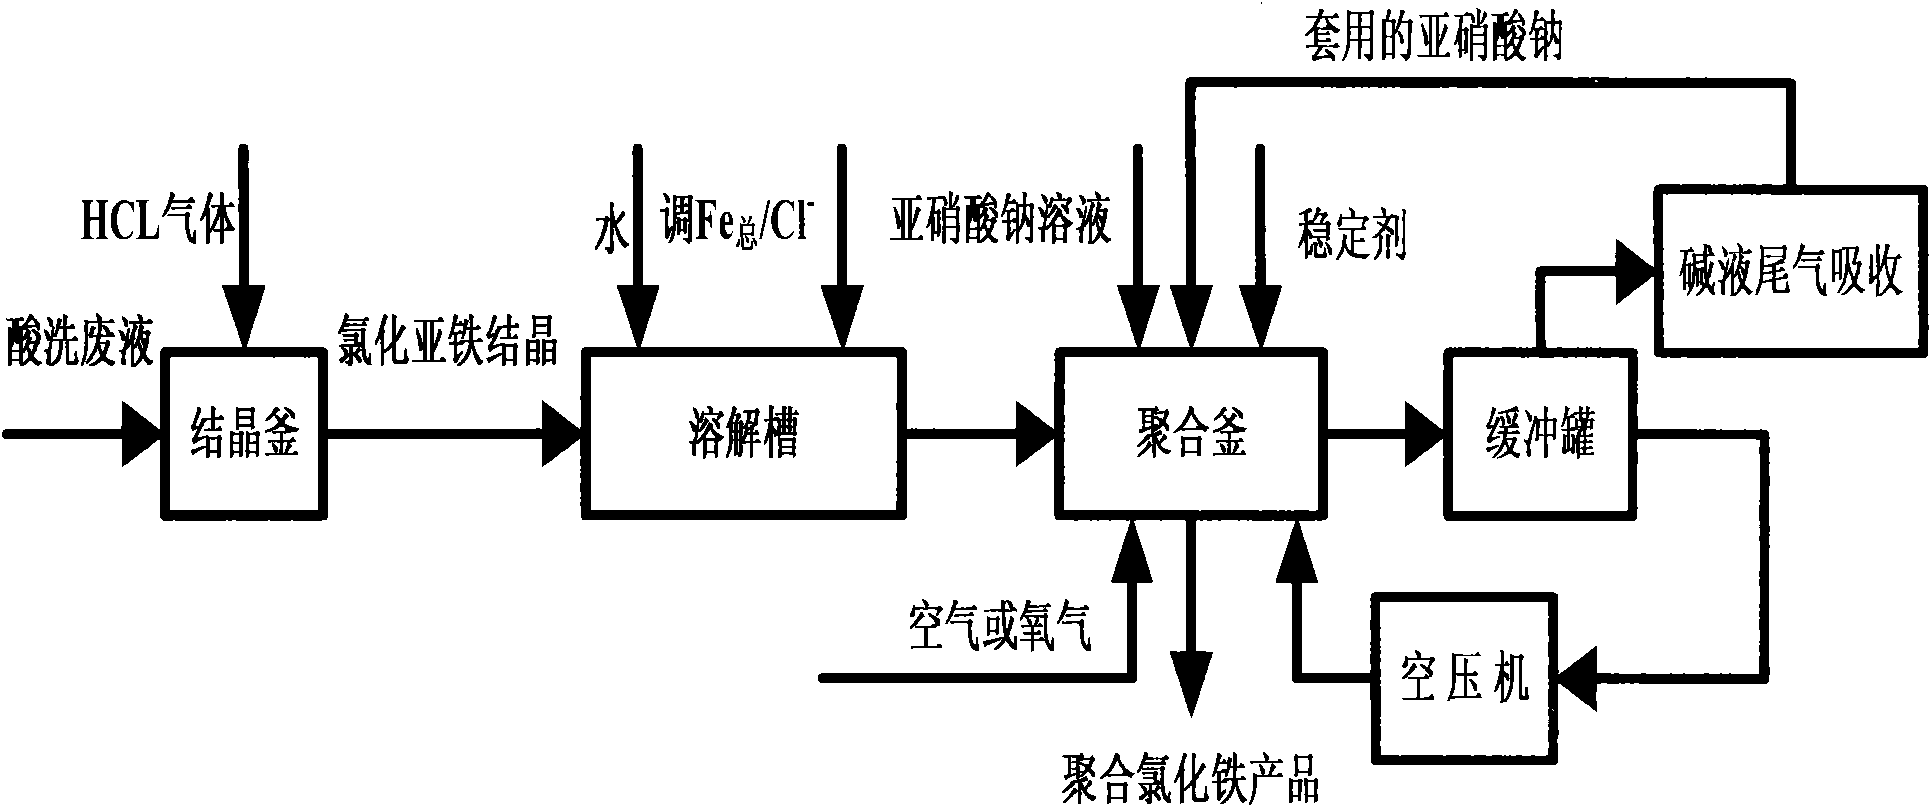 Novel production process of polyferric chloride